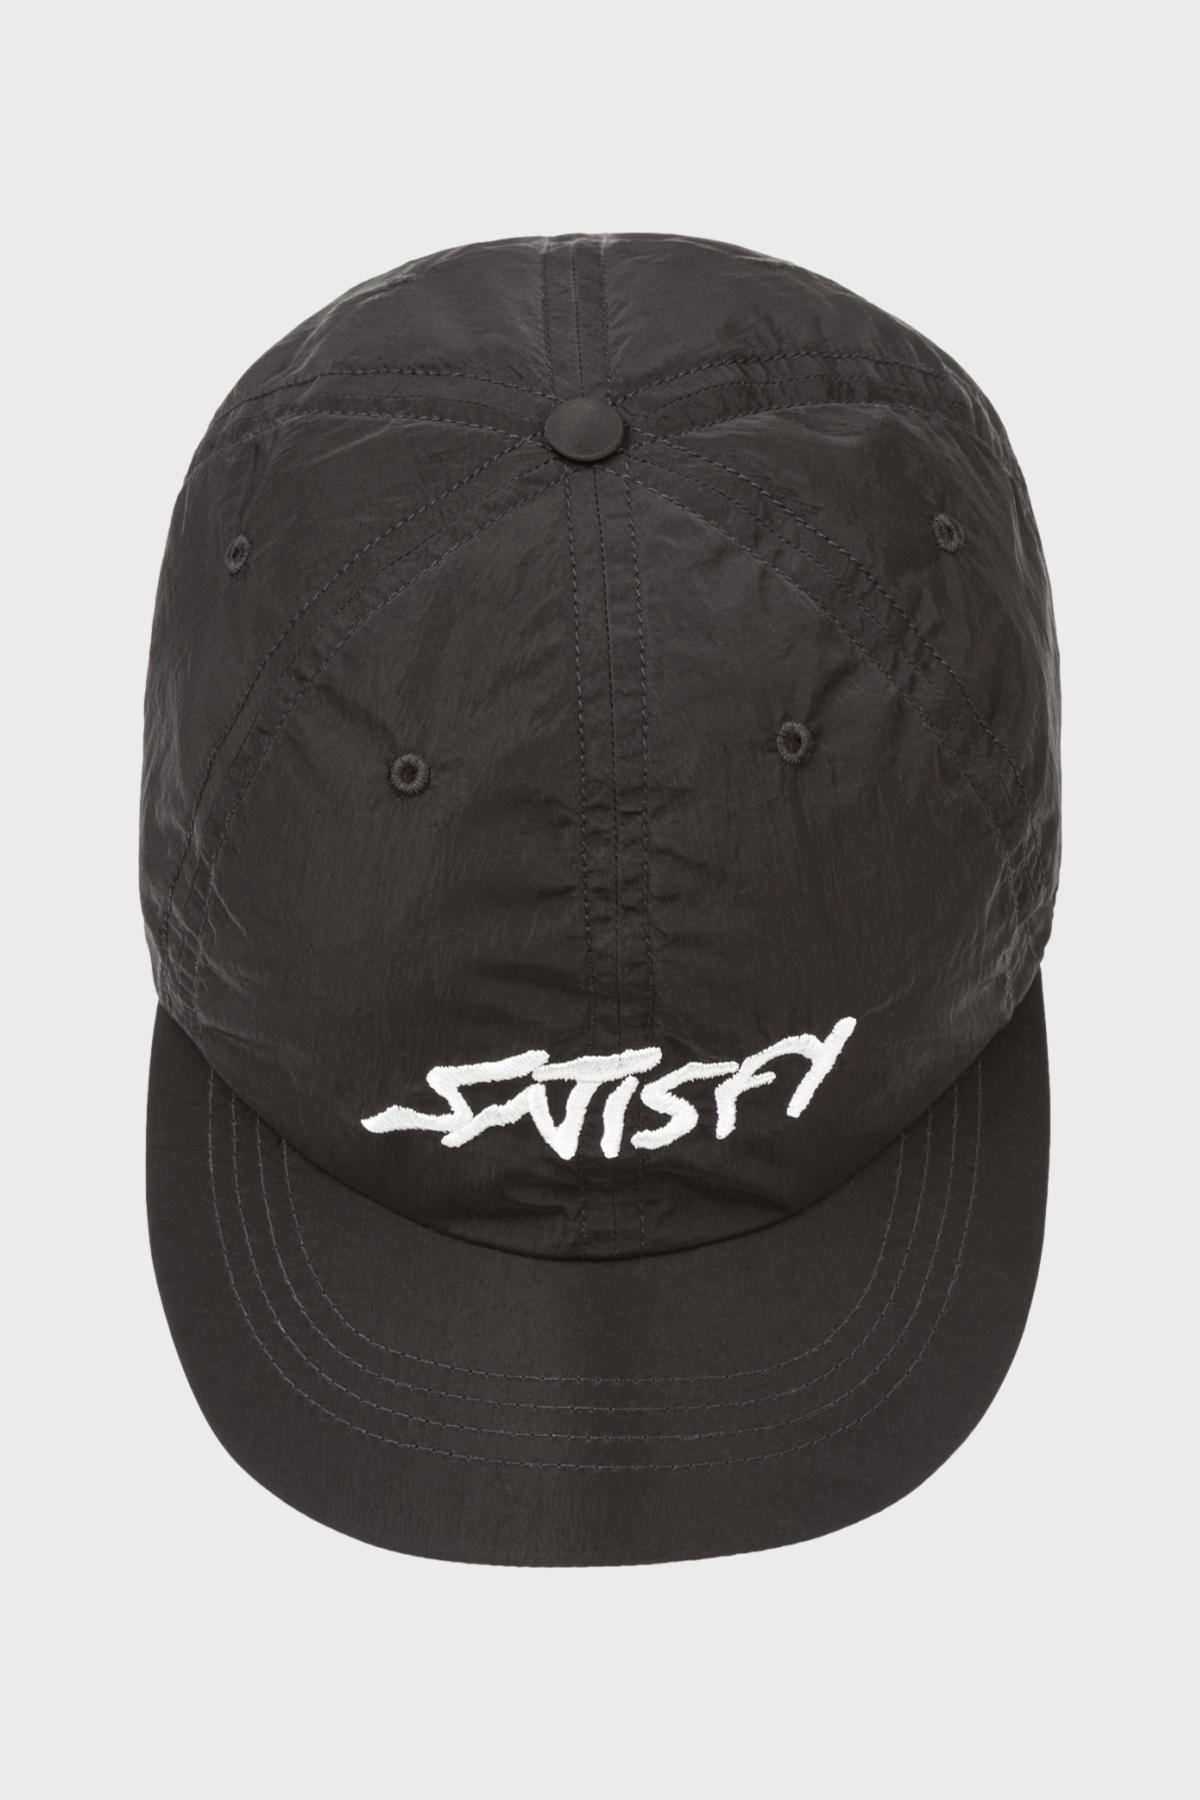 SATISFY - FliteSilkTM Running Cap